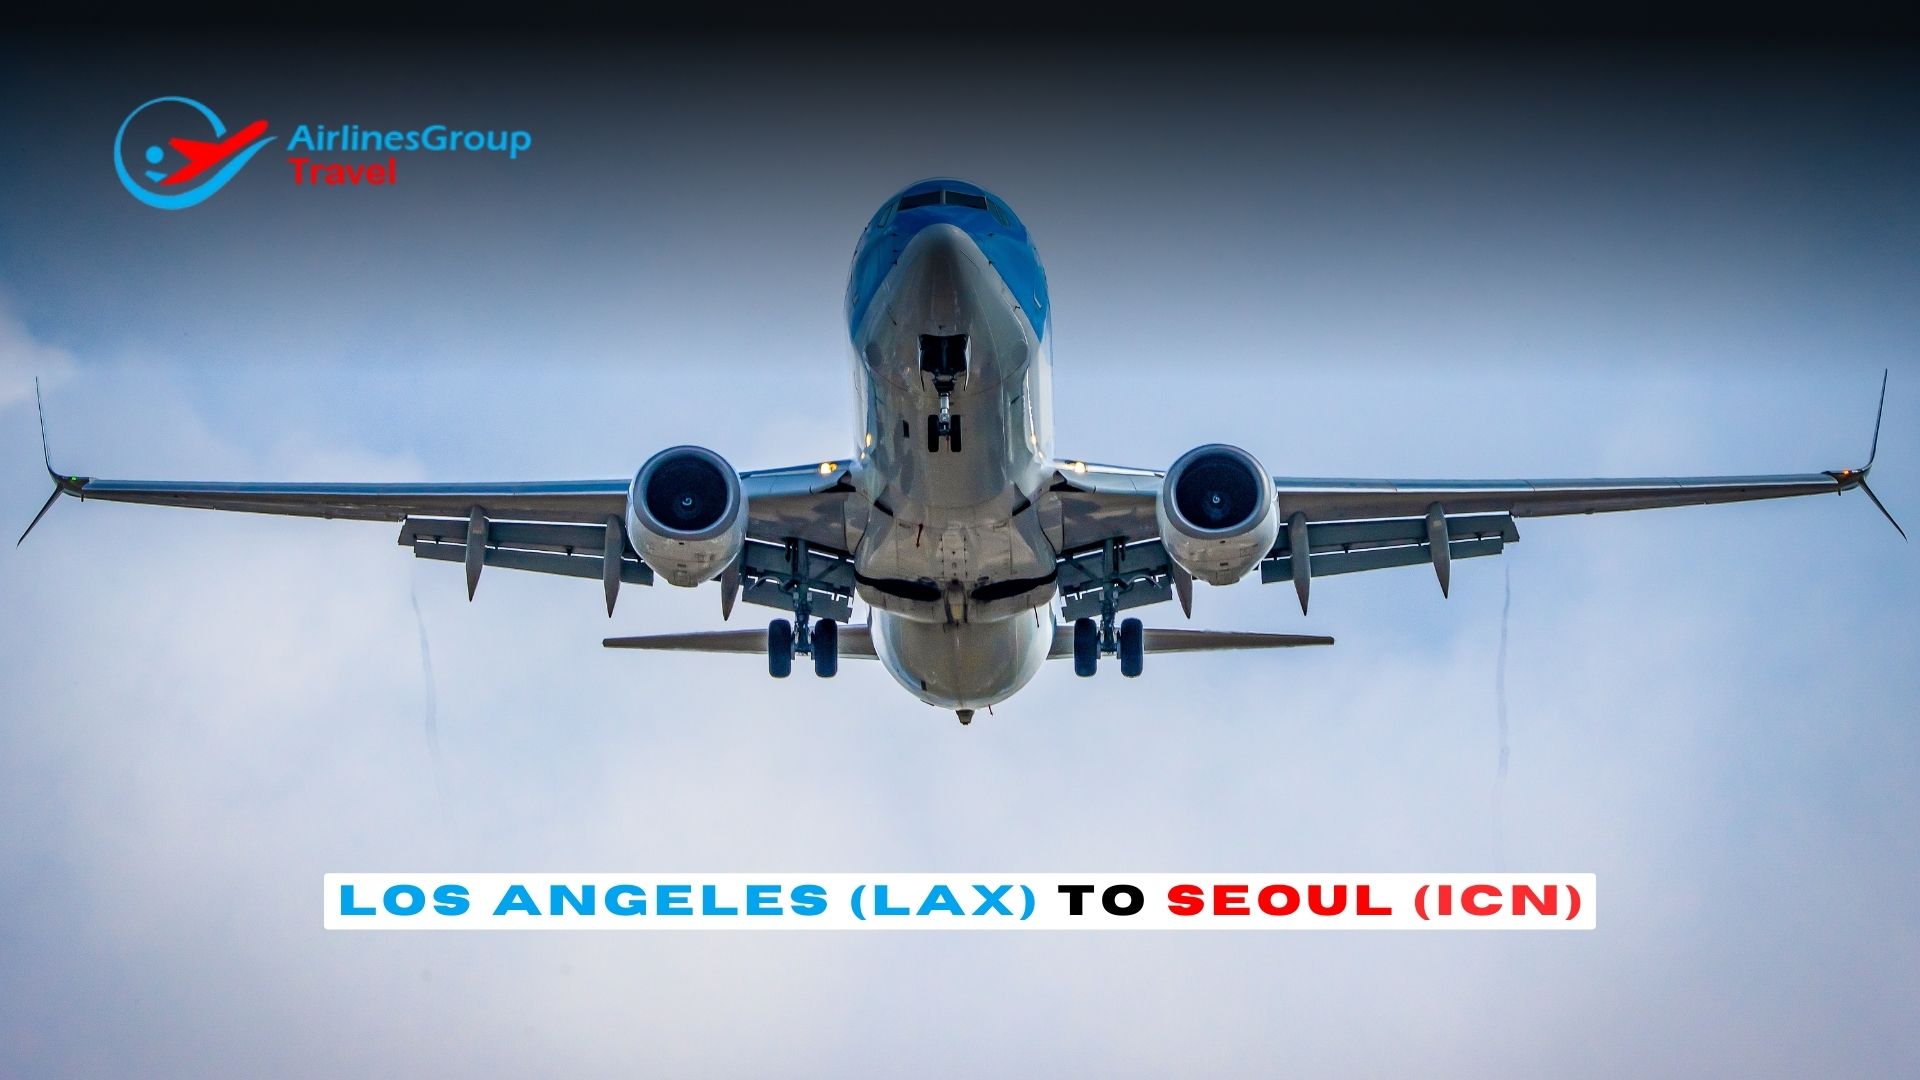 Los Angeles to Seoul